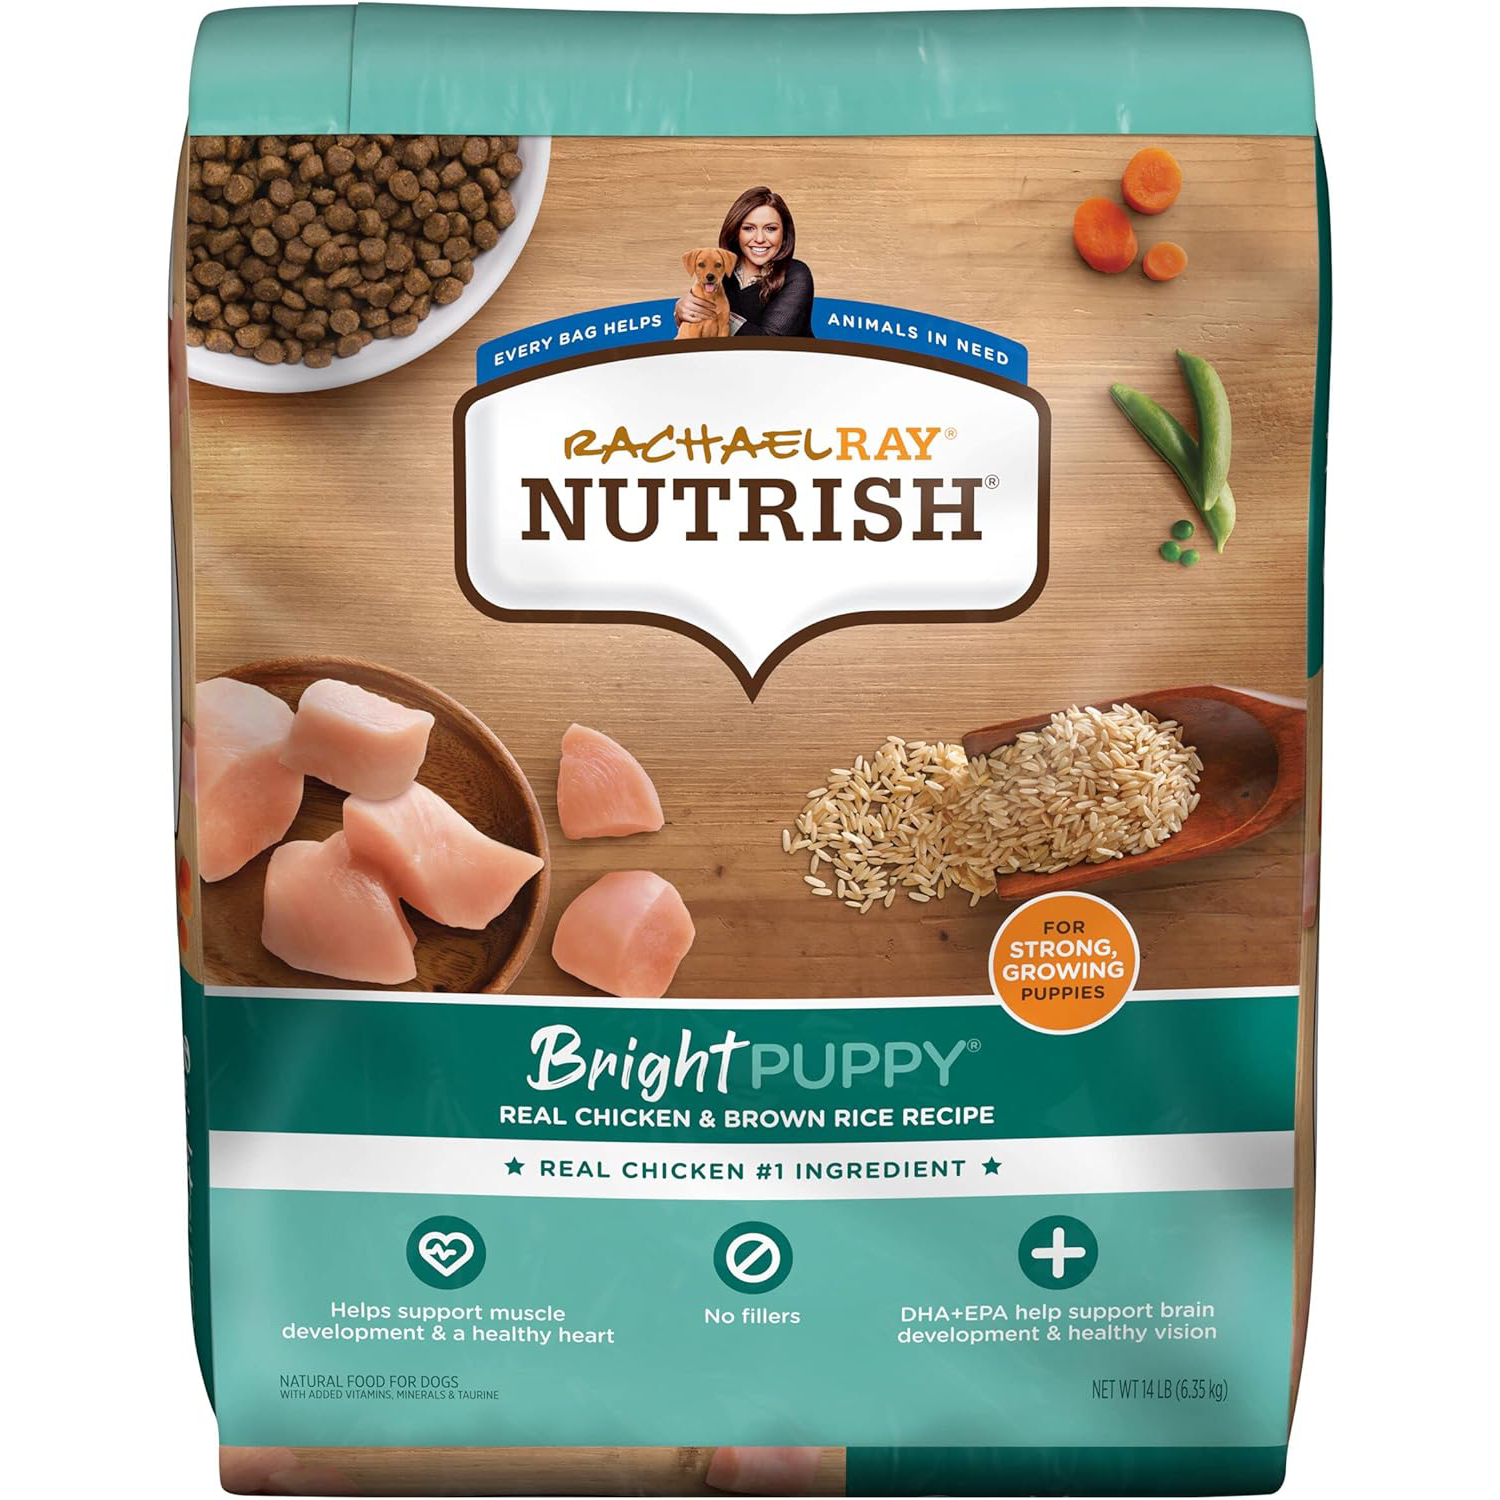 Rachael Ray Nutrish Bright Puppy Premium Natural Dry Dog Food